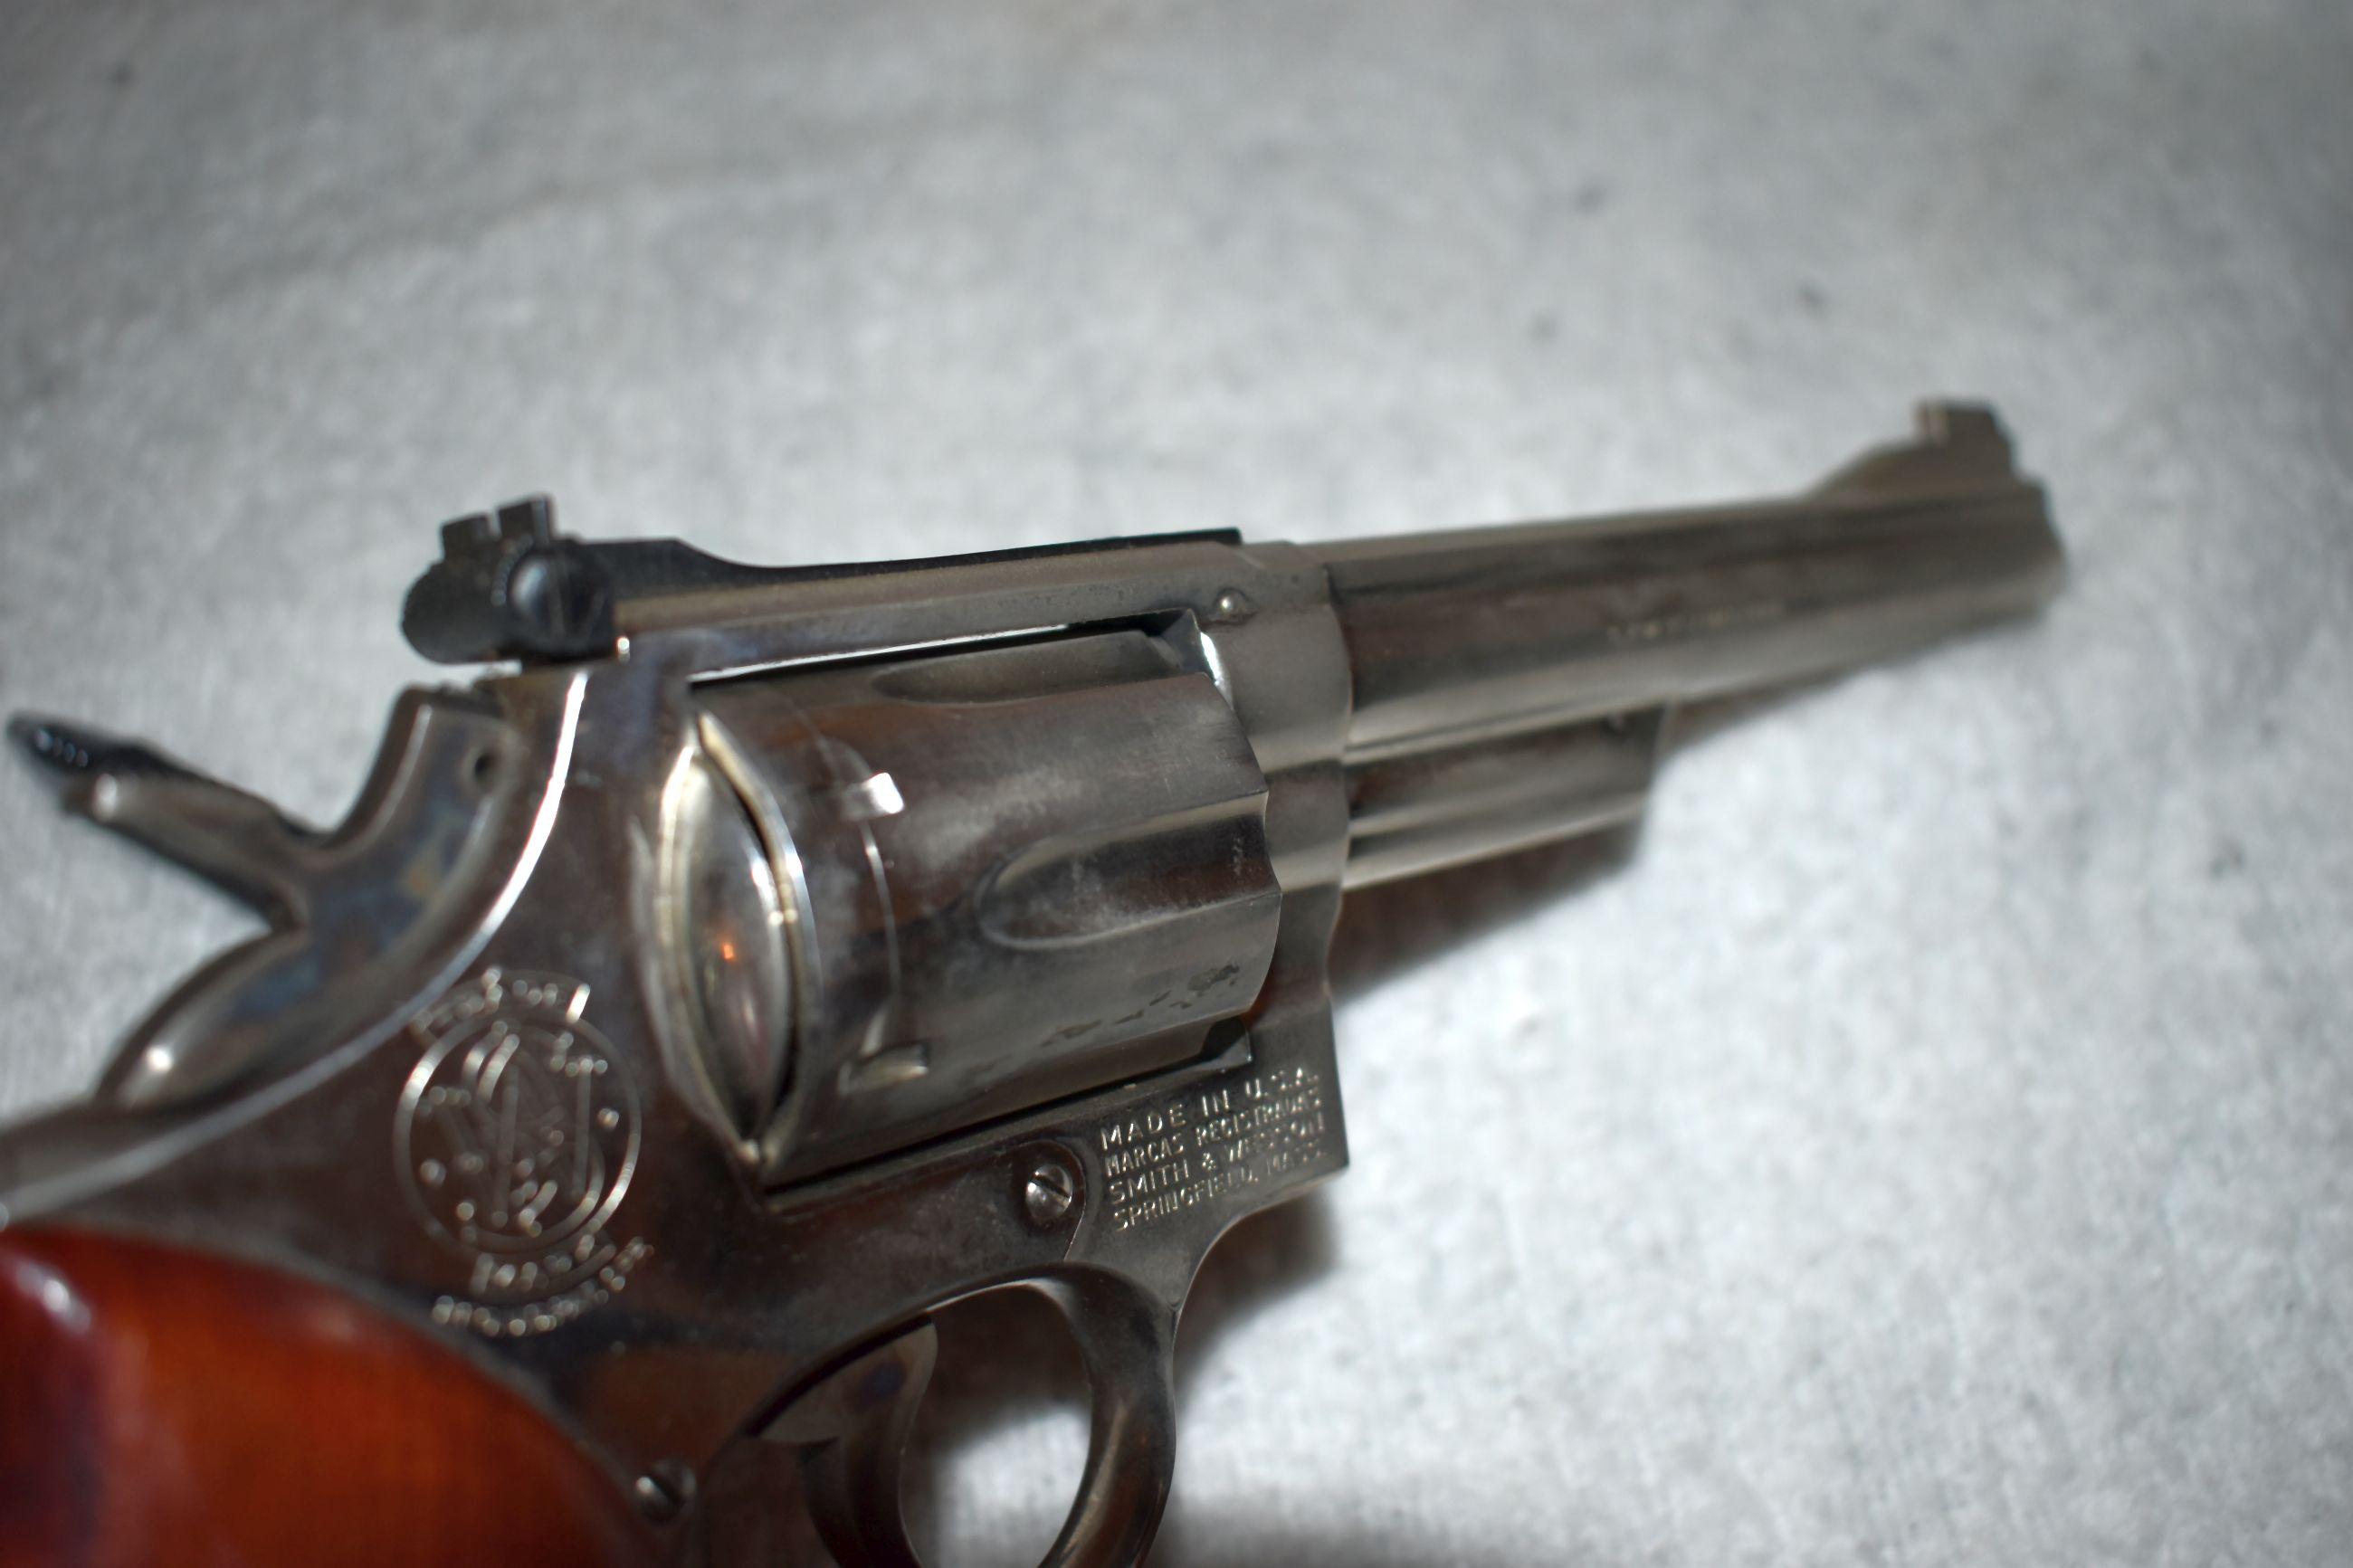 Smith & Wesson Model 19-4 .357 Magnum Revolver, 6 Shot, 6'' Barrel, With Holster, SN:46K9281